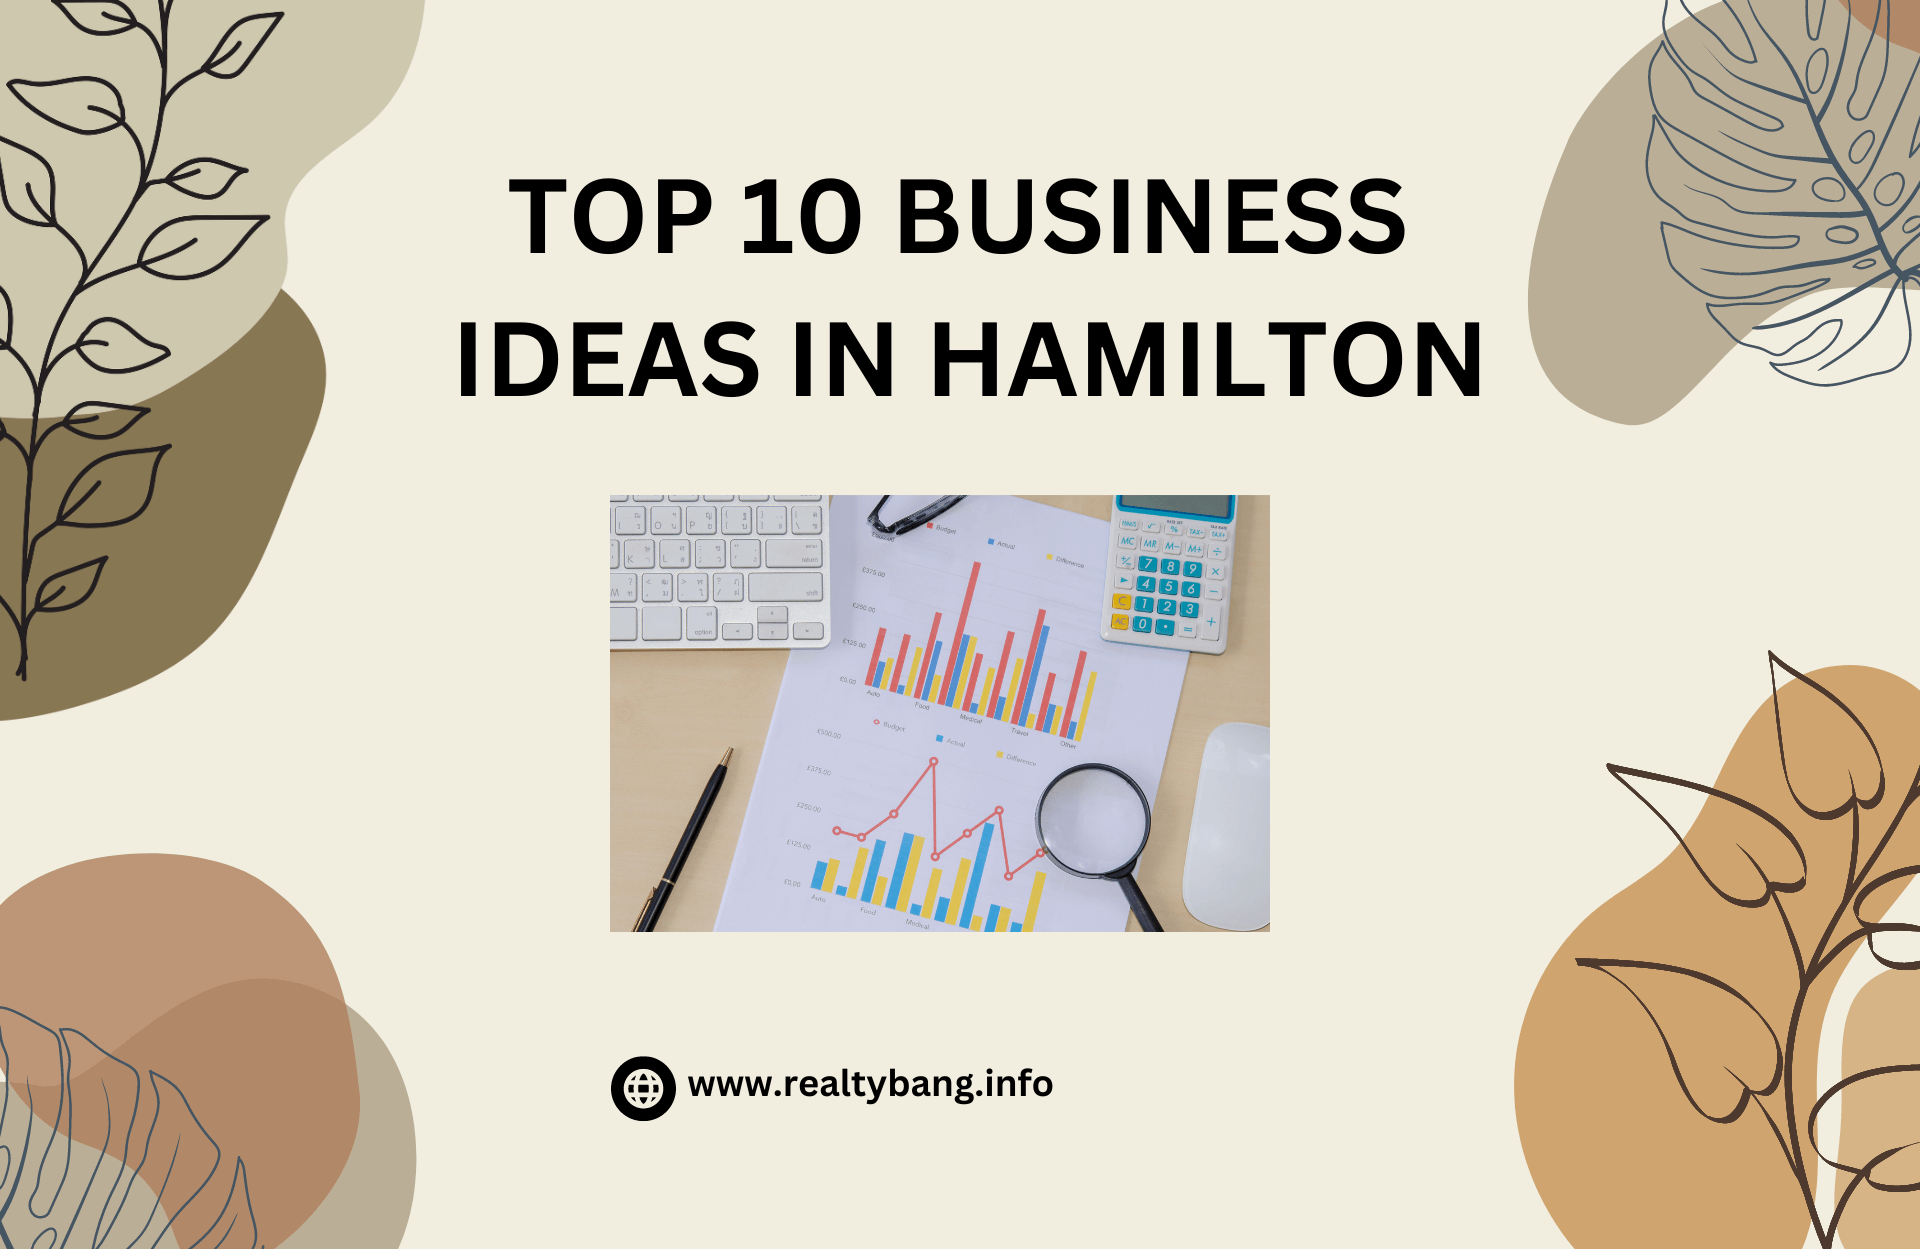 TOP 10 BUSINESS IDEAS IN HAMILTON